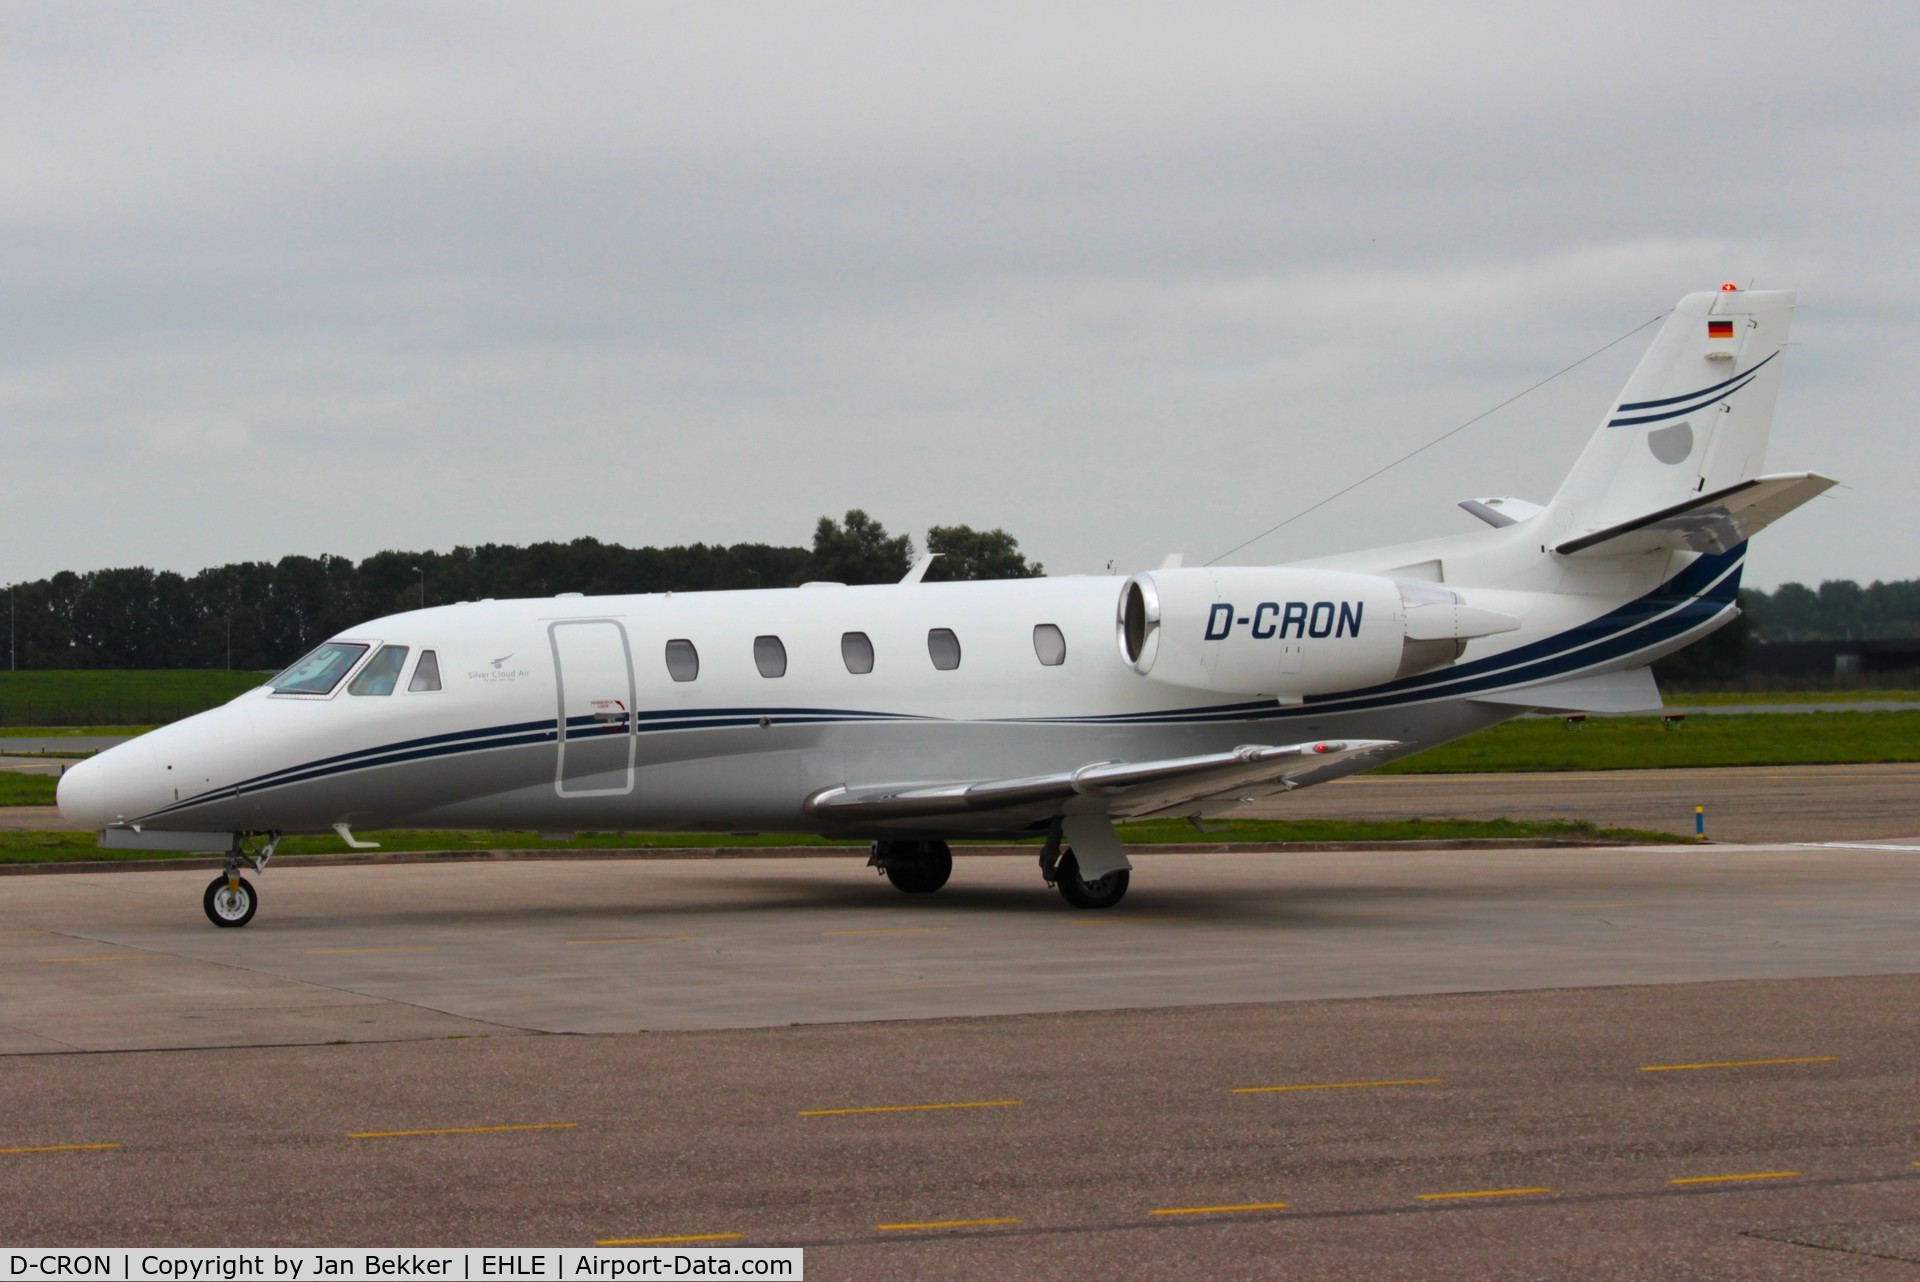 D-CRON, 2008 Cessna 560 Citation XLS C/N 560-5762, Lelystad Airport